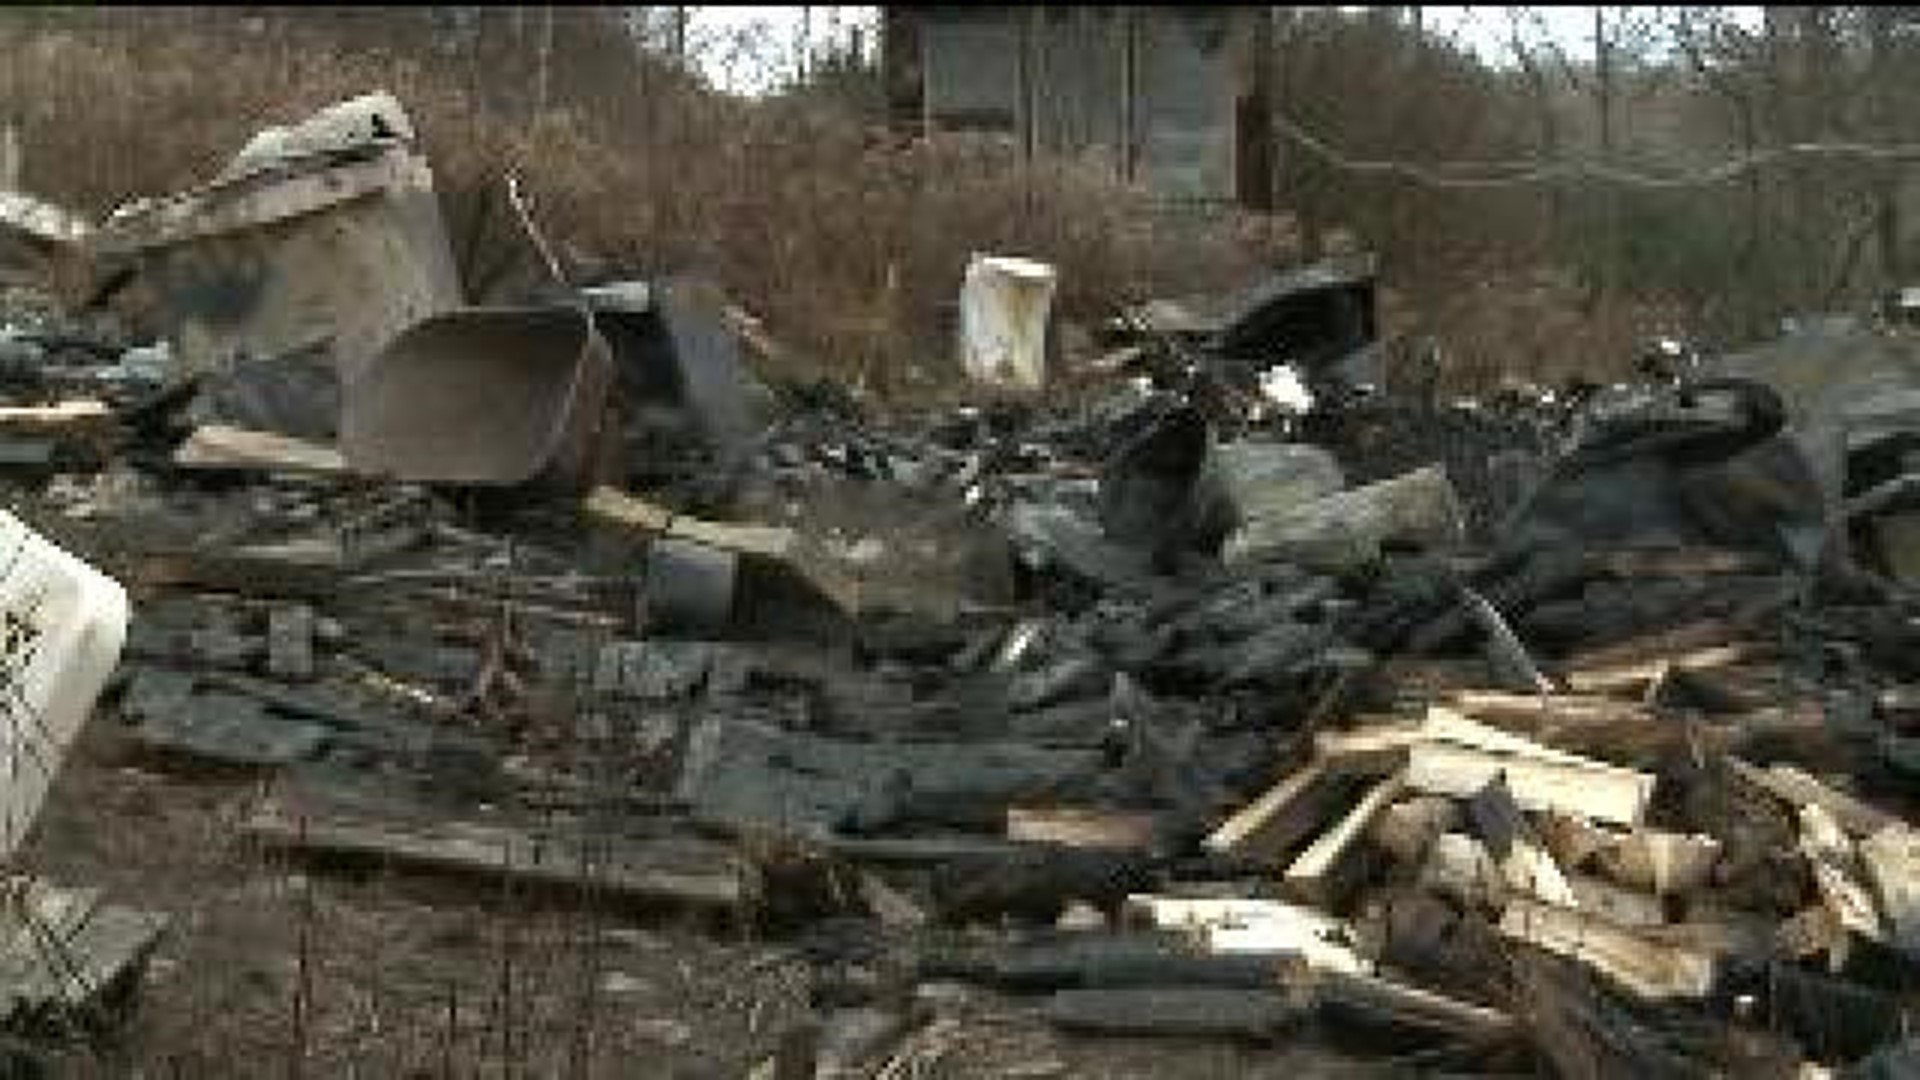 Eight Dachshunds Feared Dead After Fire